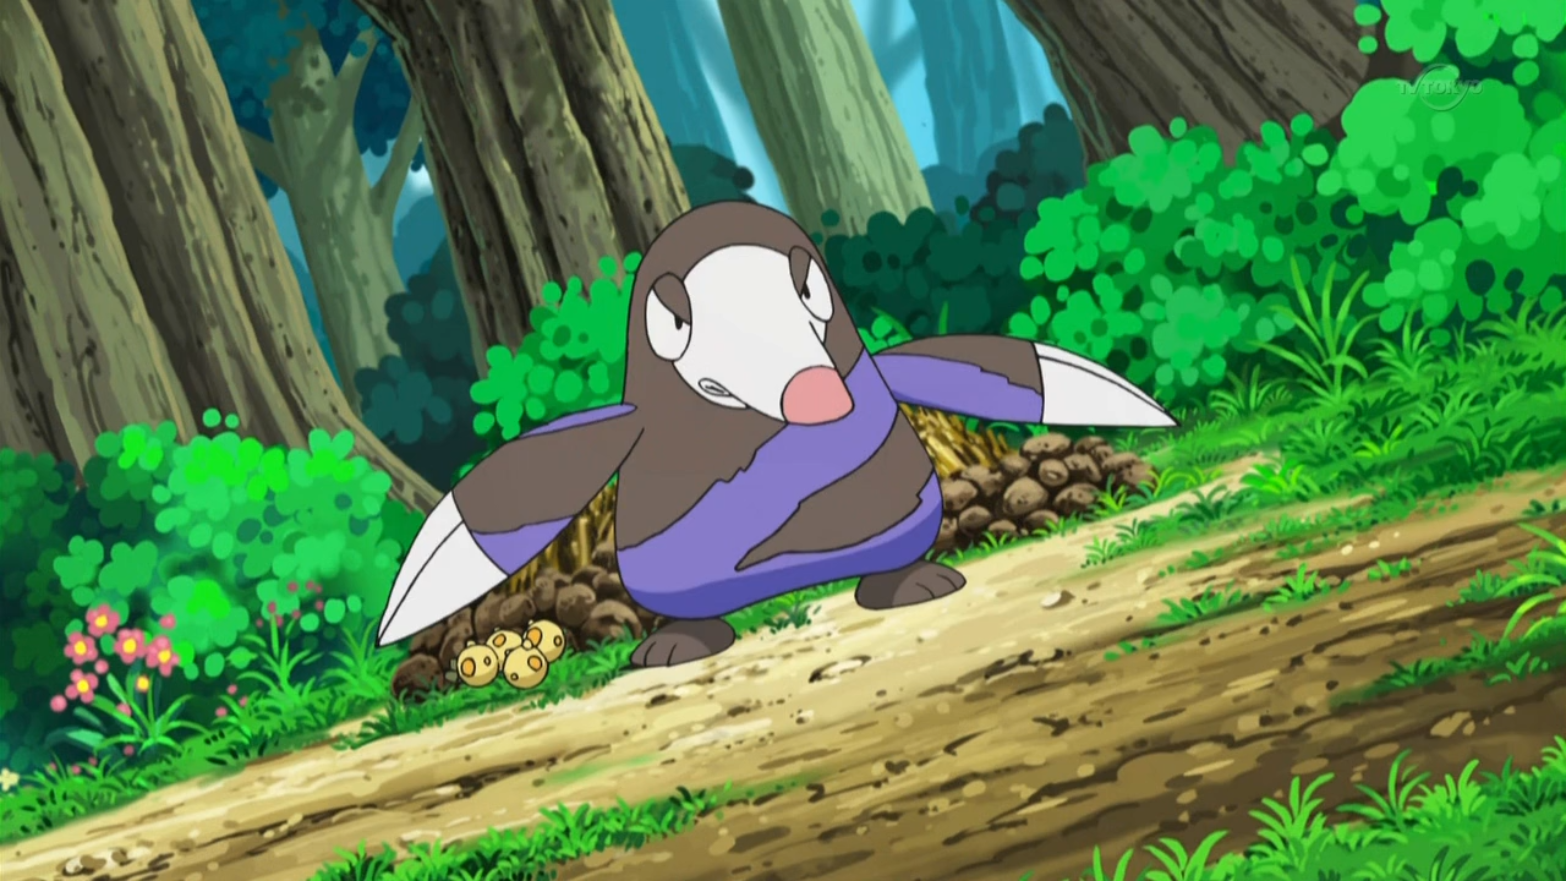 Excadrill - Pokémon | page 2 of 3 - Zerochan Anime Image Board